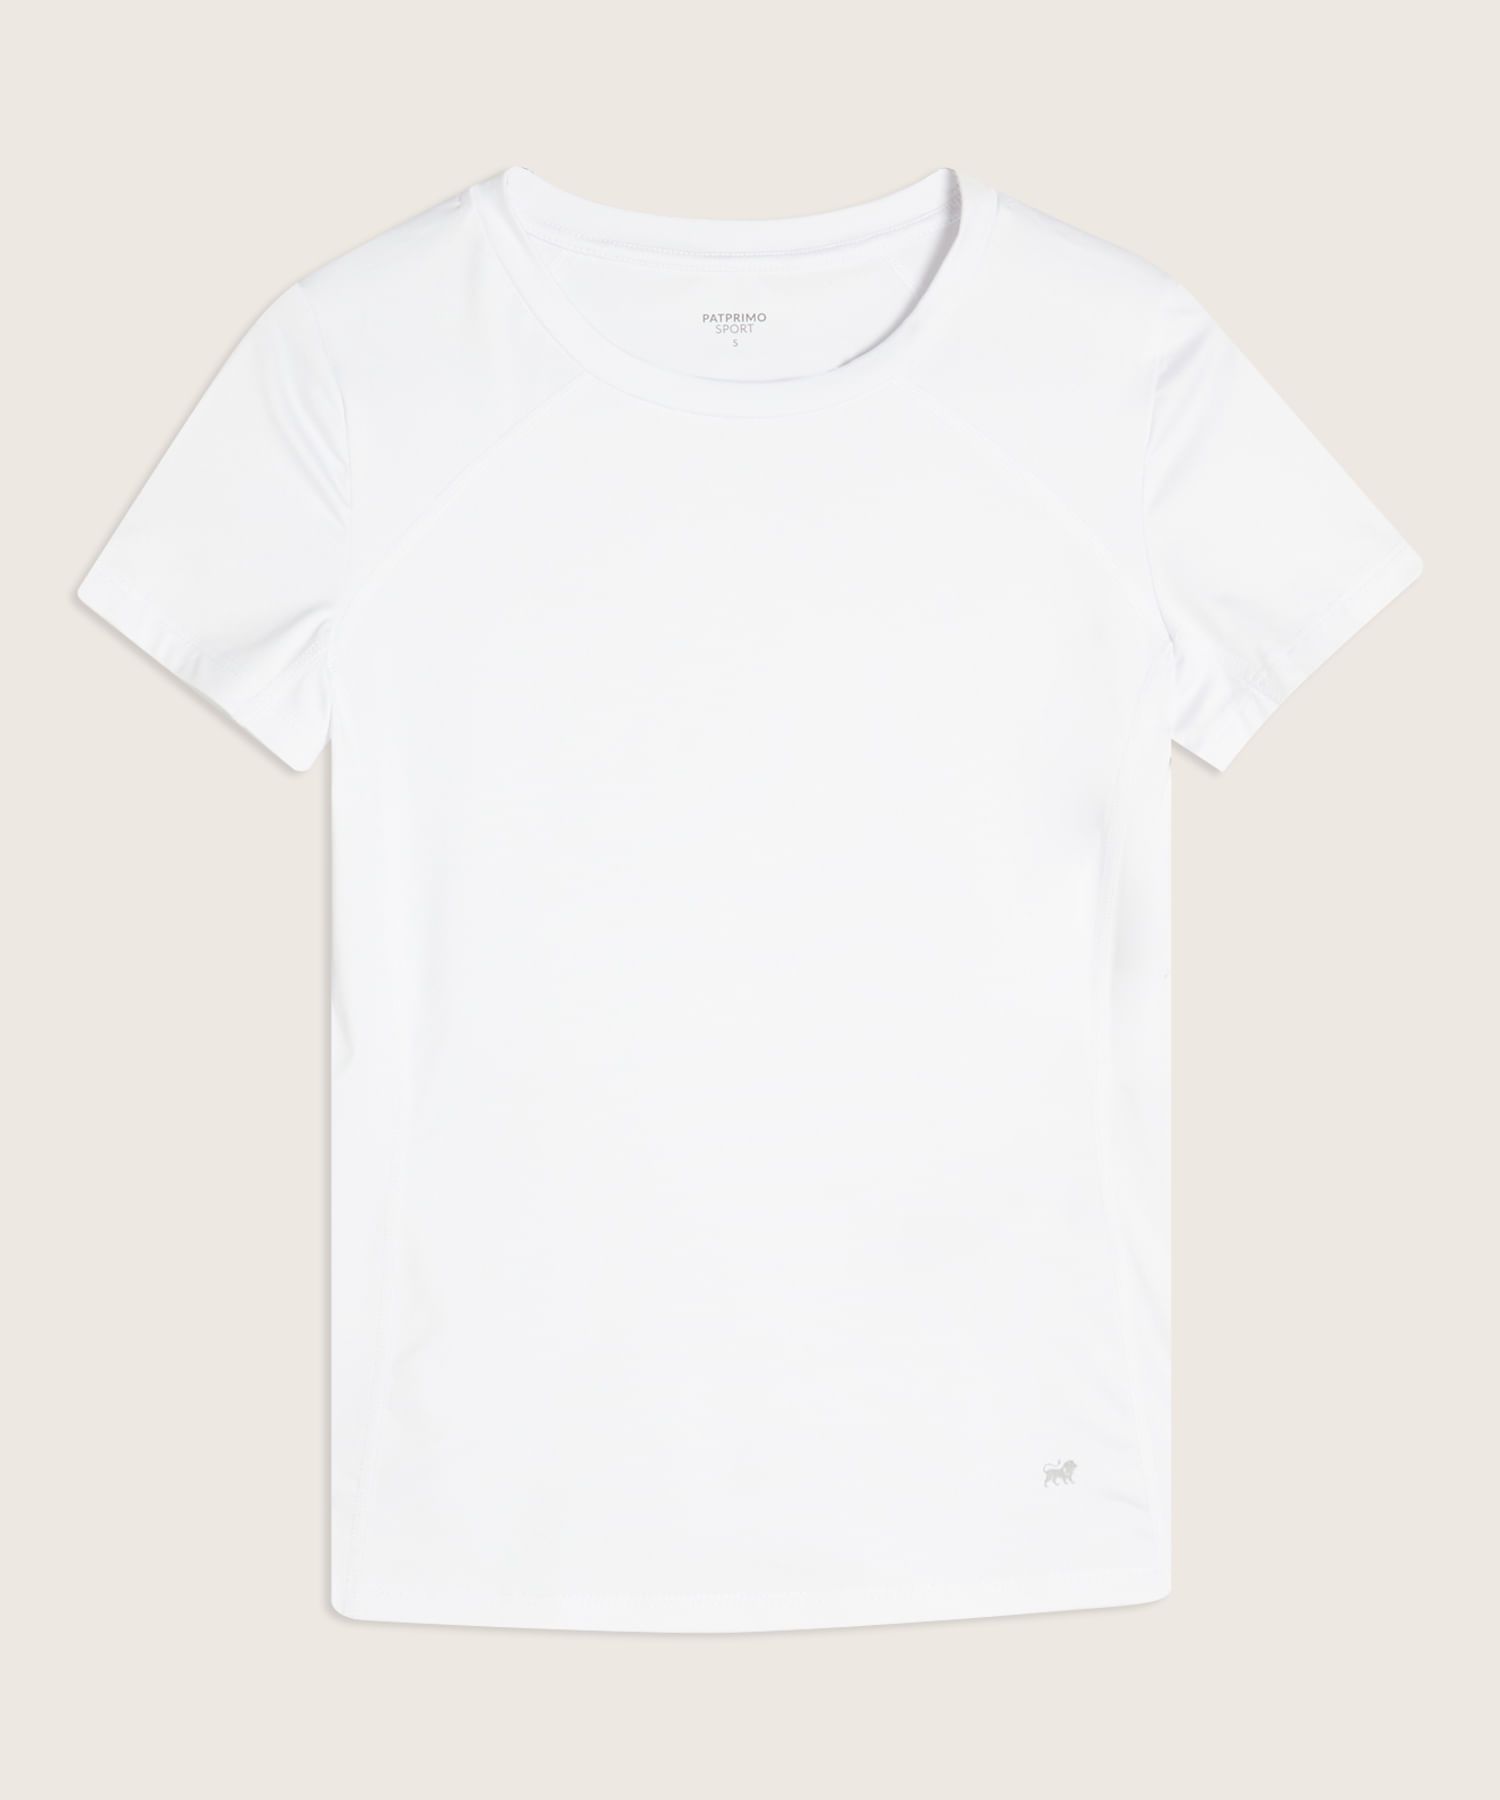 Camiseta Para Hombre De Diseño Deportivo, Cuello Redondo, Manga Corta  44090307 - Patprimo